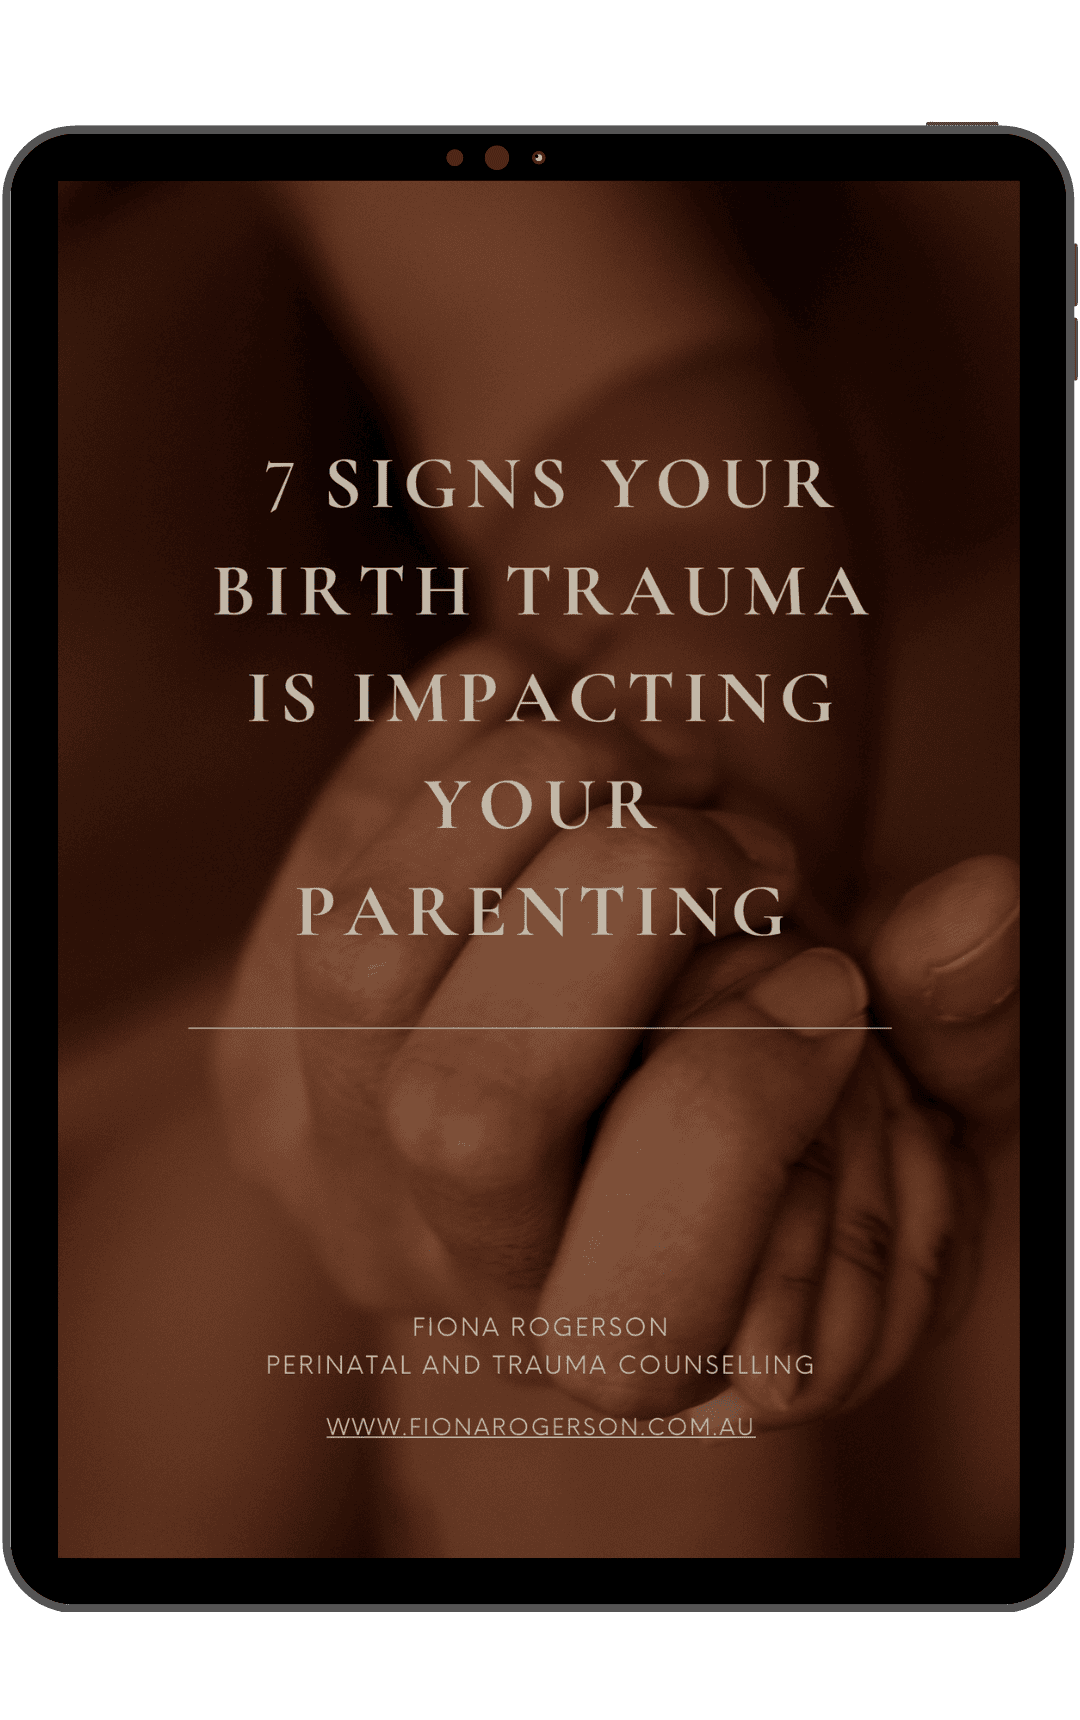 Birth Trauma Impacting Parenting Fiona Rogerson Perinatal and Trauma Counselling